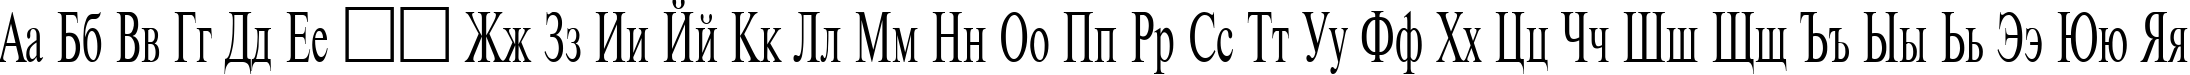 Пример написания русского алфавита шрифтом TimesET55n